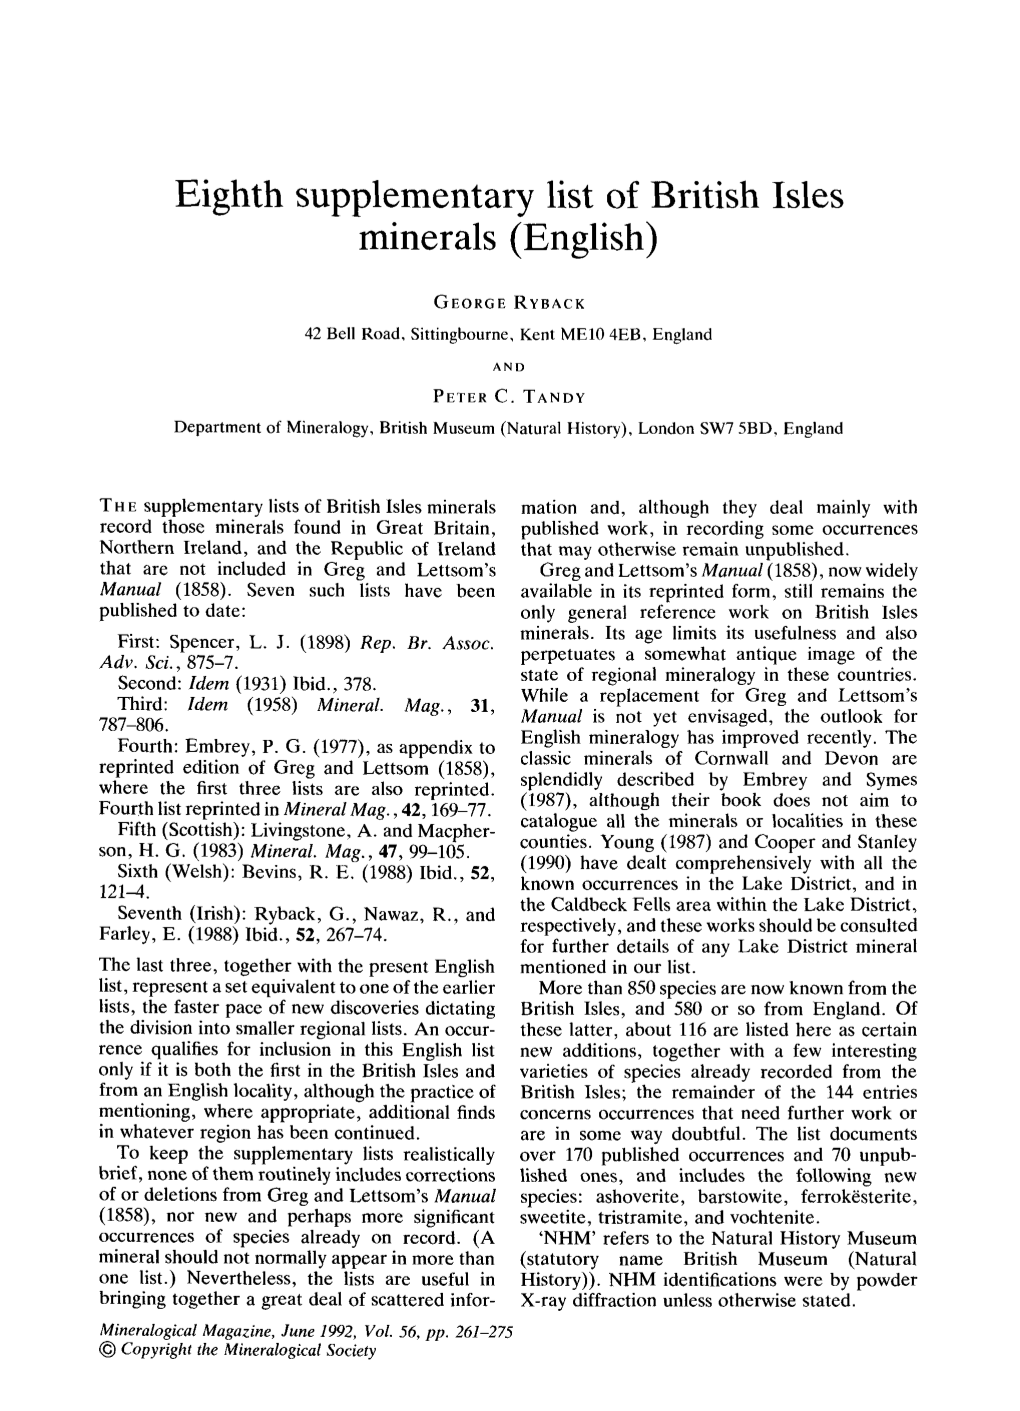 Eighth Supplementary List of British Isles Minerals (English)